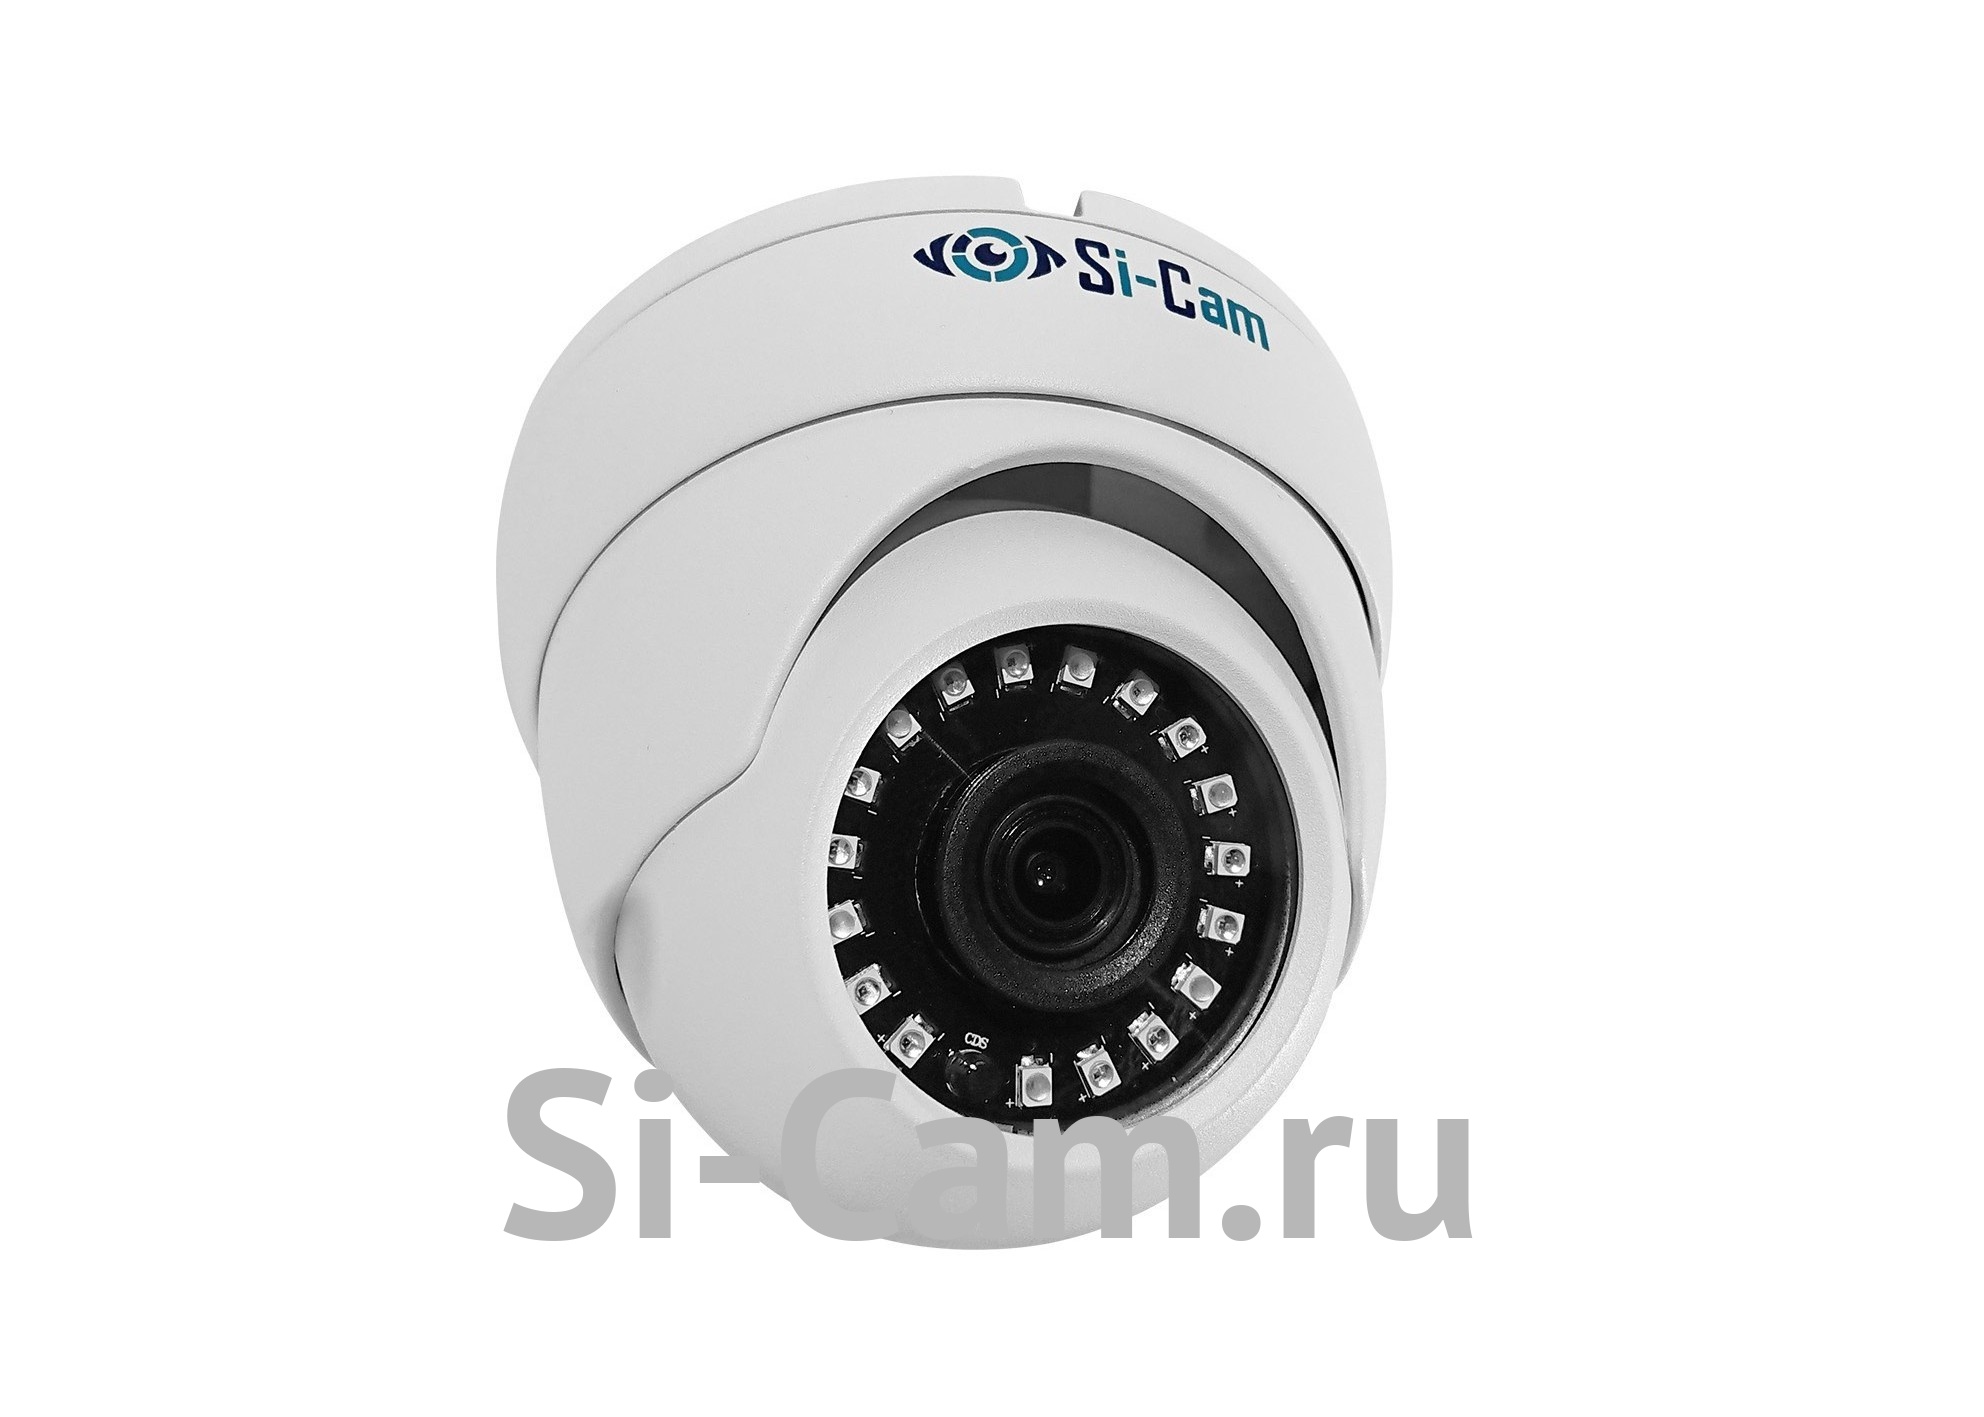 Si-Cam SC-DSW302F IR Купольная уличная антивандальная IP видеокамера (3Mpx, 2304*1296, 25к/с, FULL COLOR, WDR/HDR)